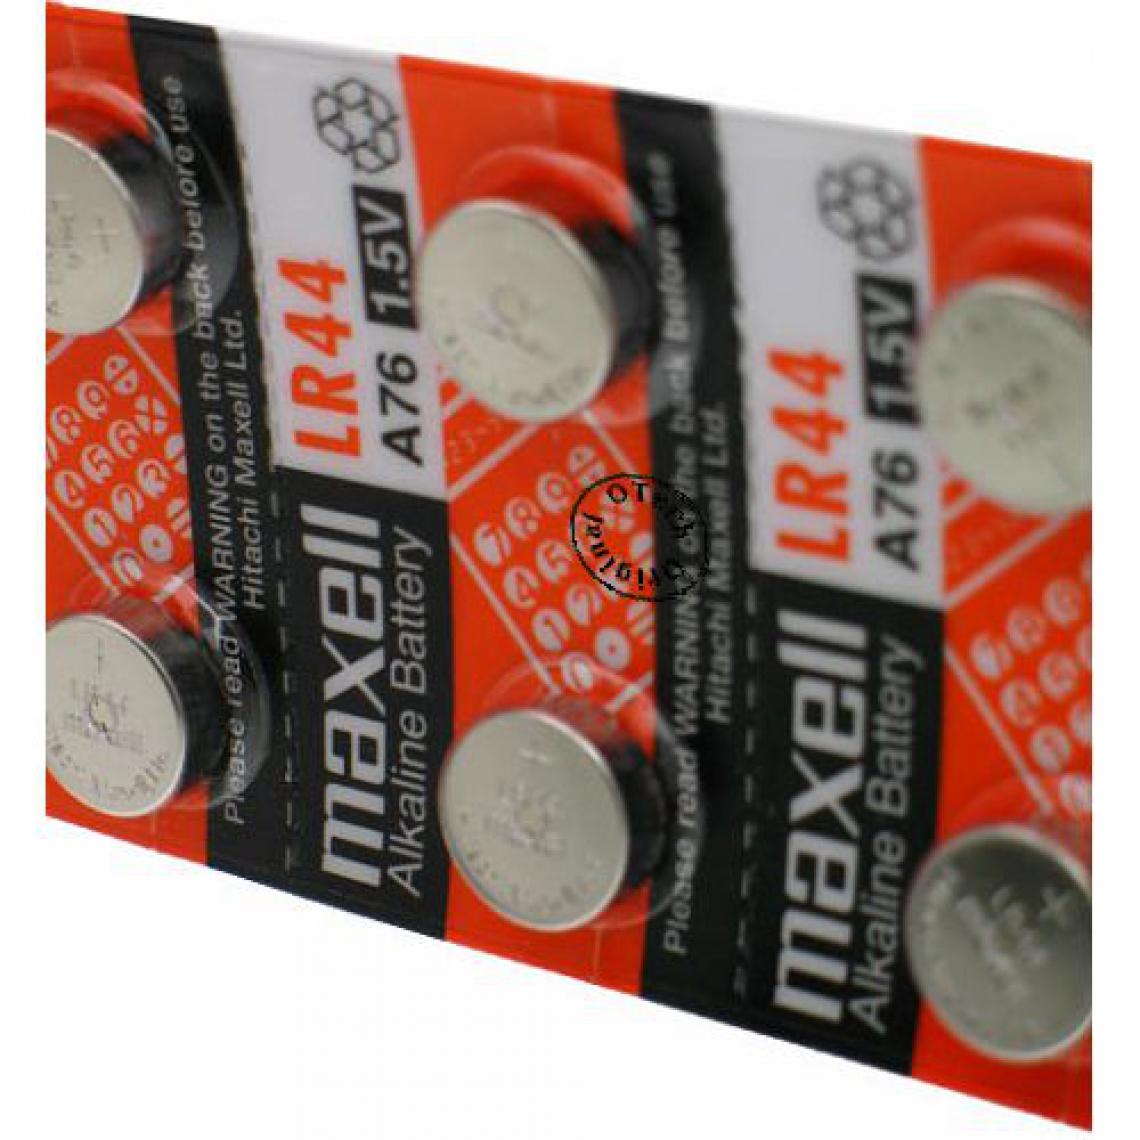 Otech - Pack de 10 piles maxell pour MAXELL MLR44 - Piles rechargeables